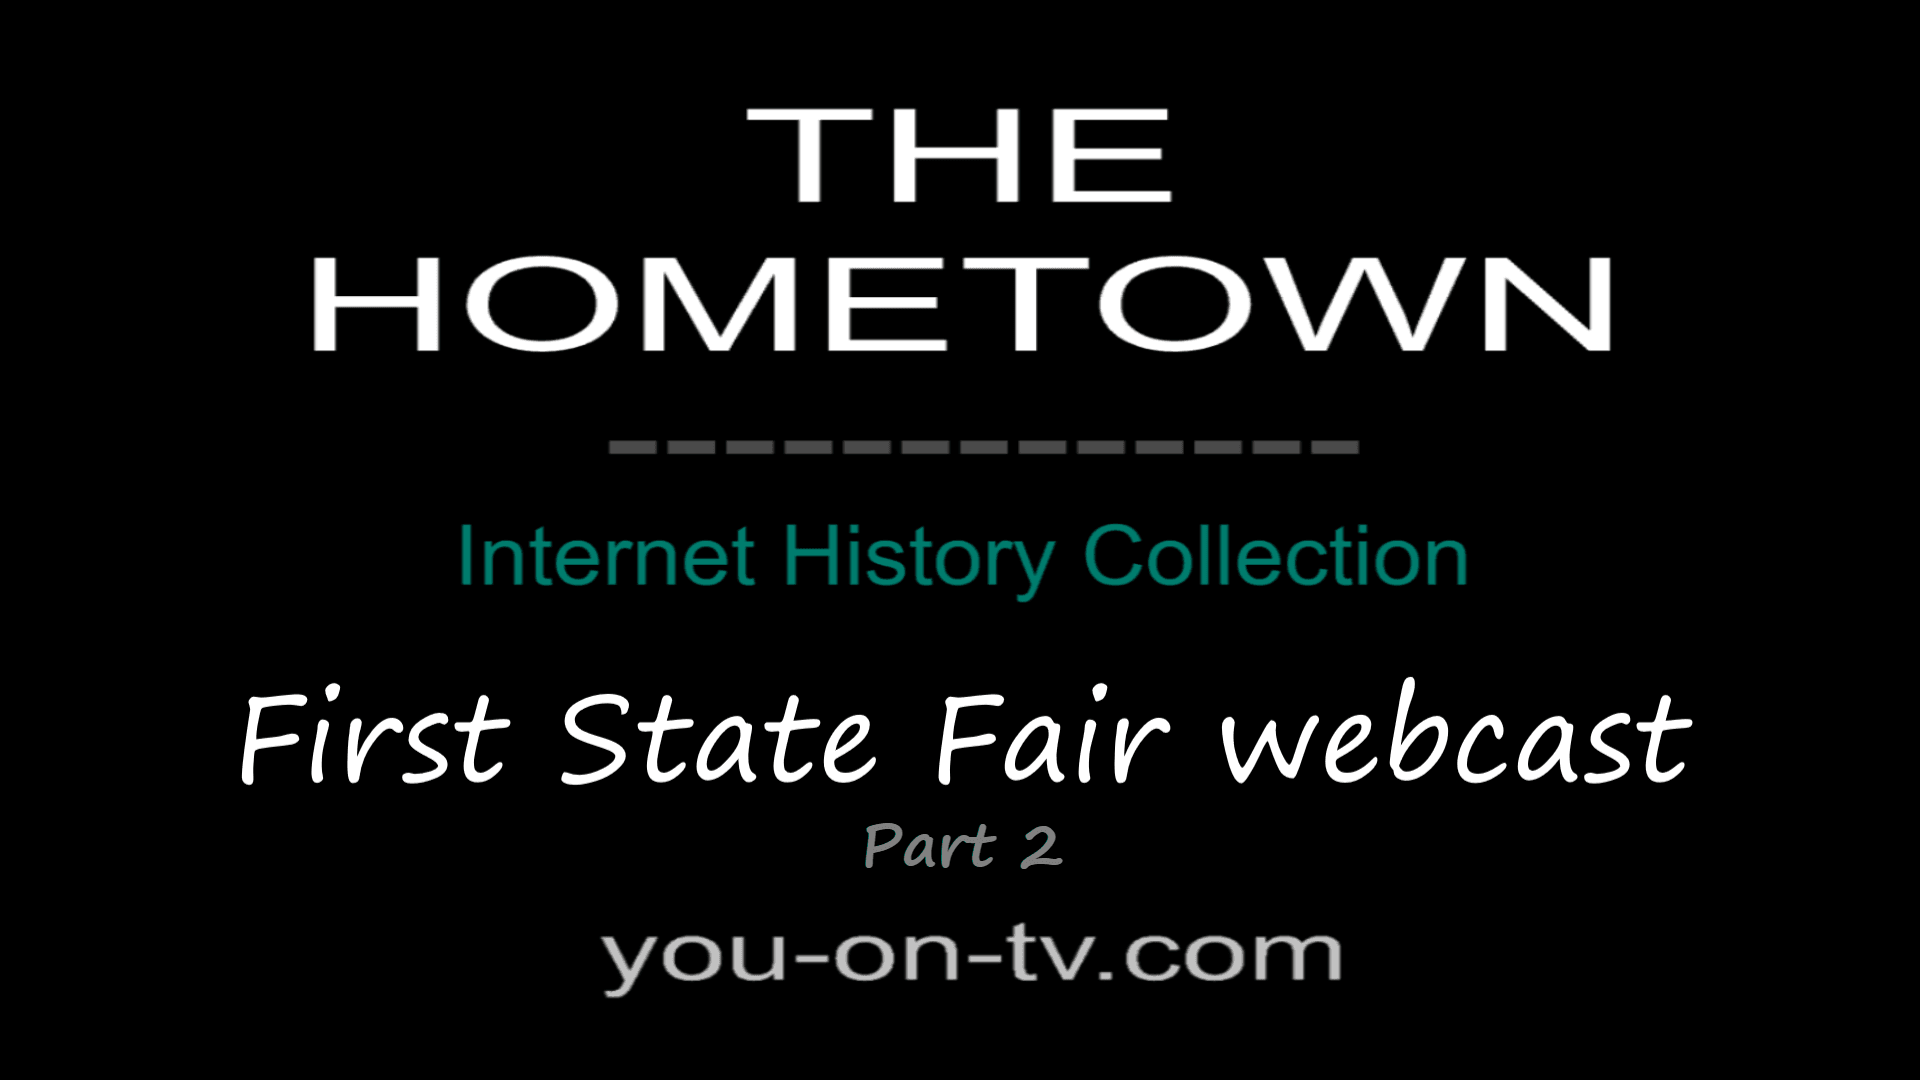 First State Fair Webcast video #22